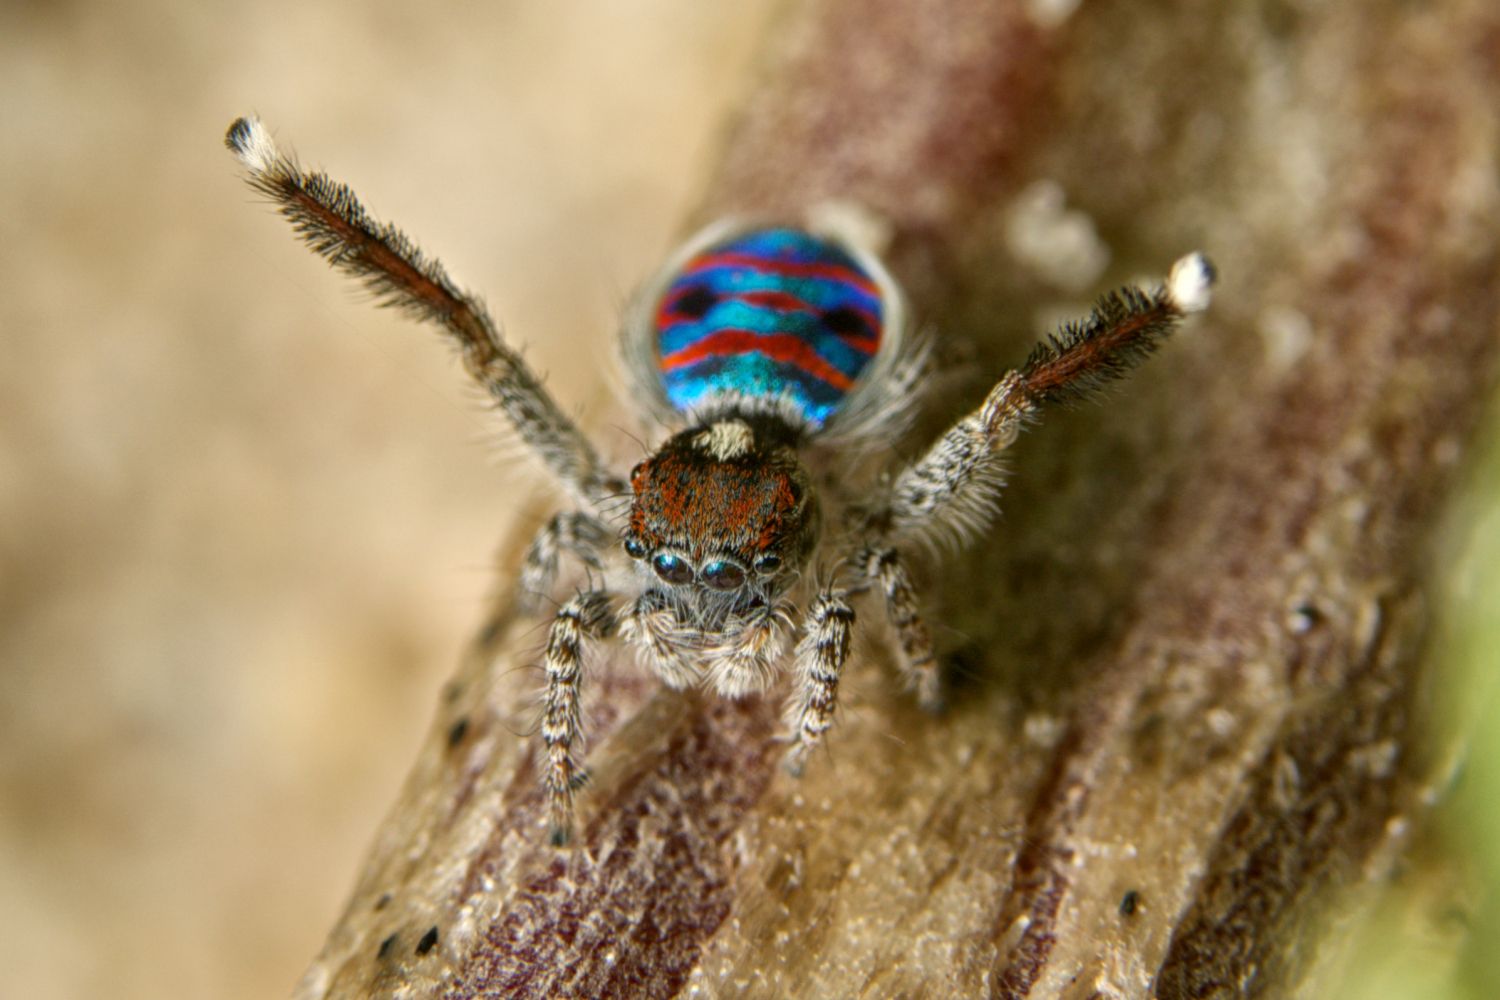 Description Of Peacock Spider